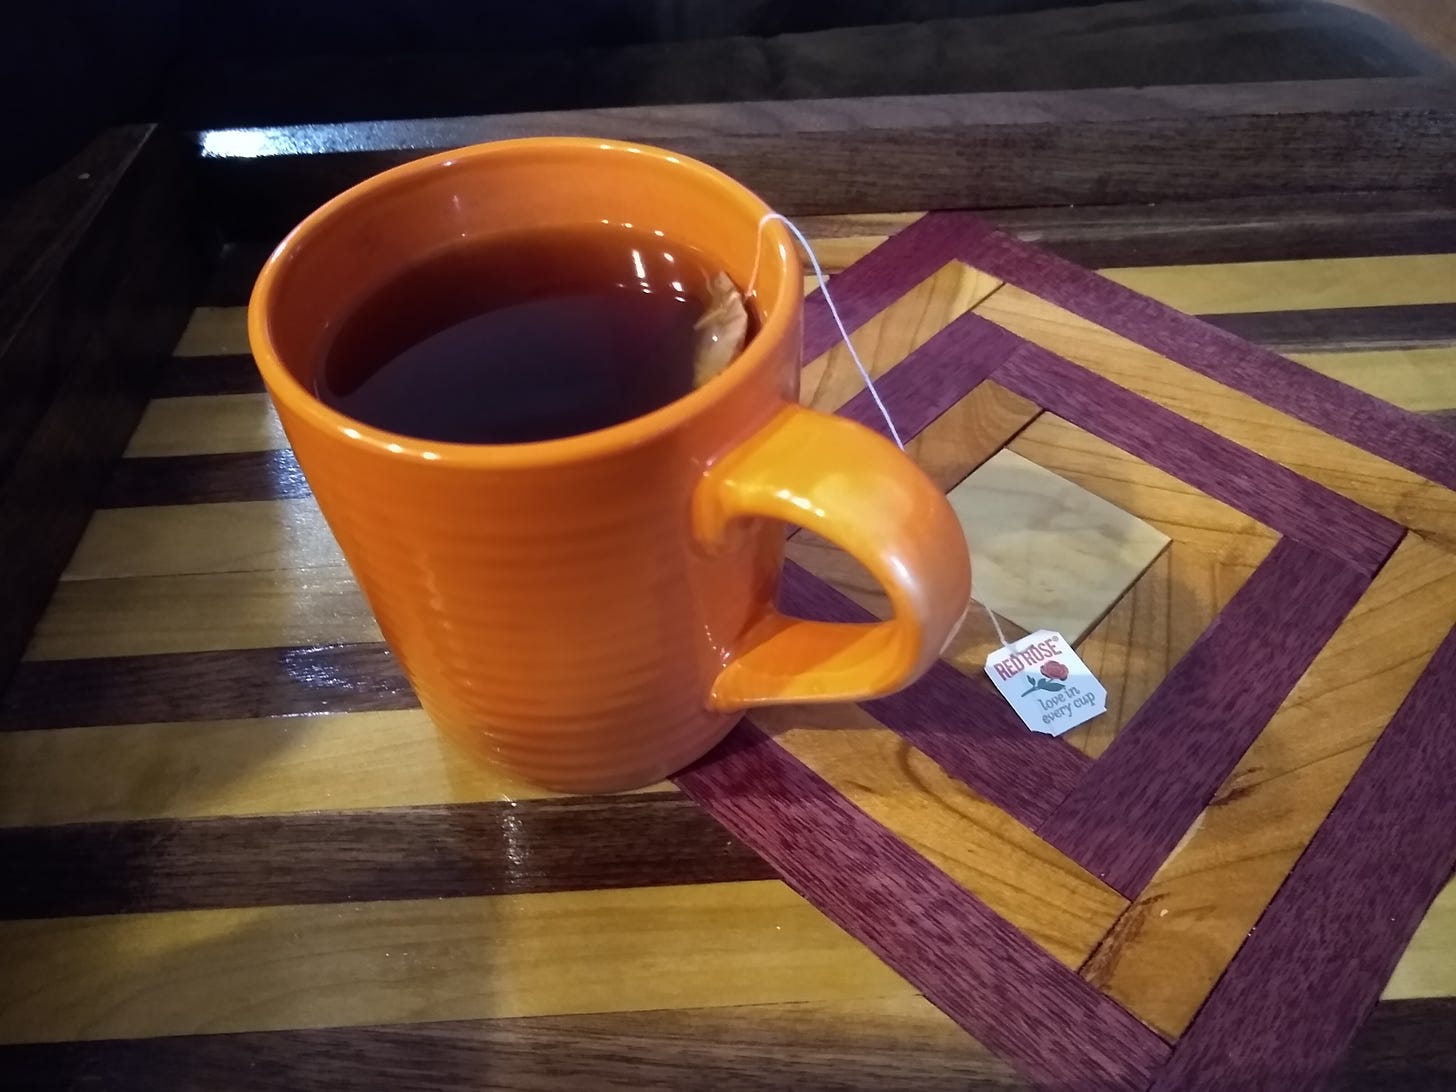 Red Rose black tea in an orange mug on a wooden tray